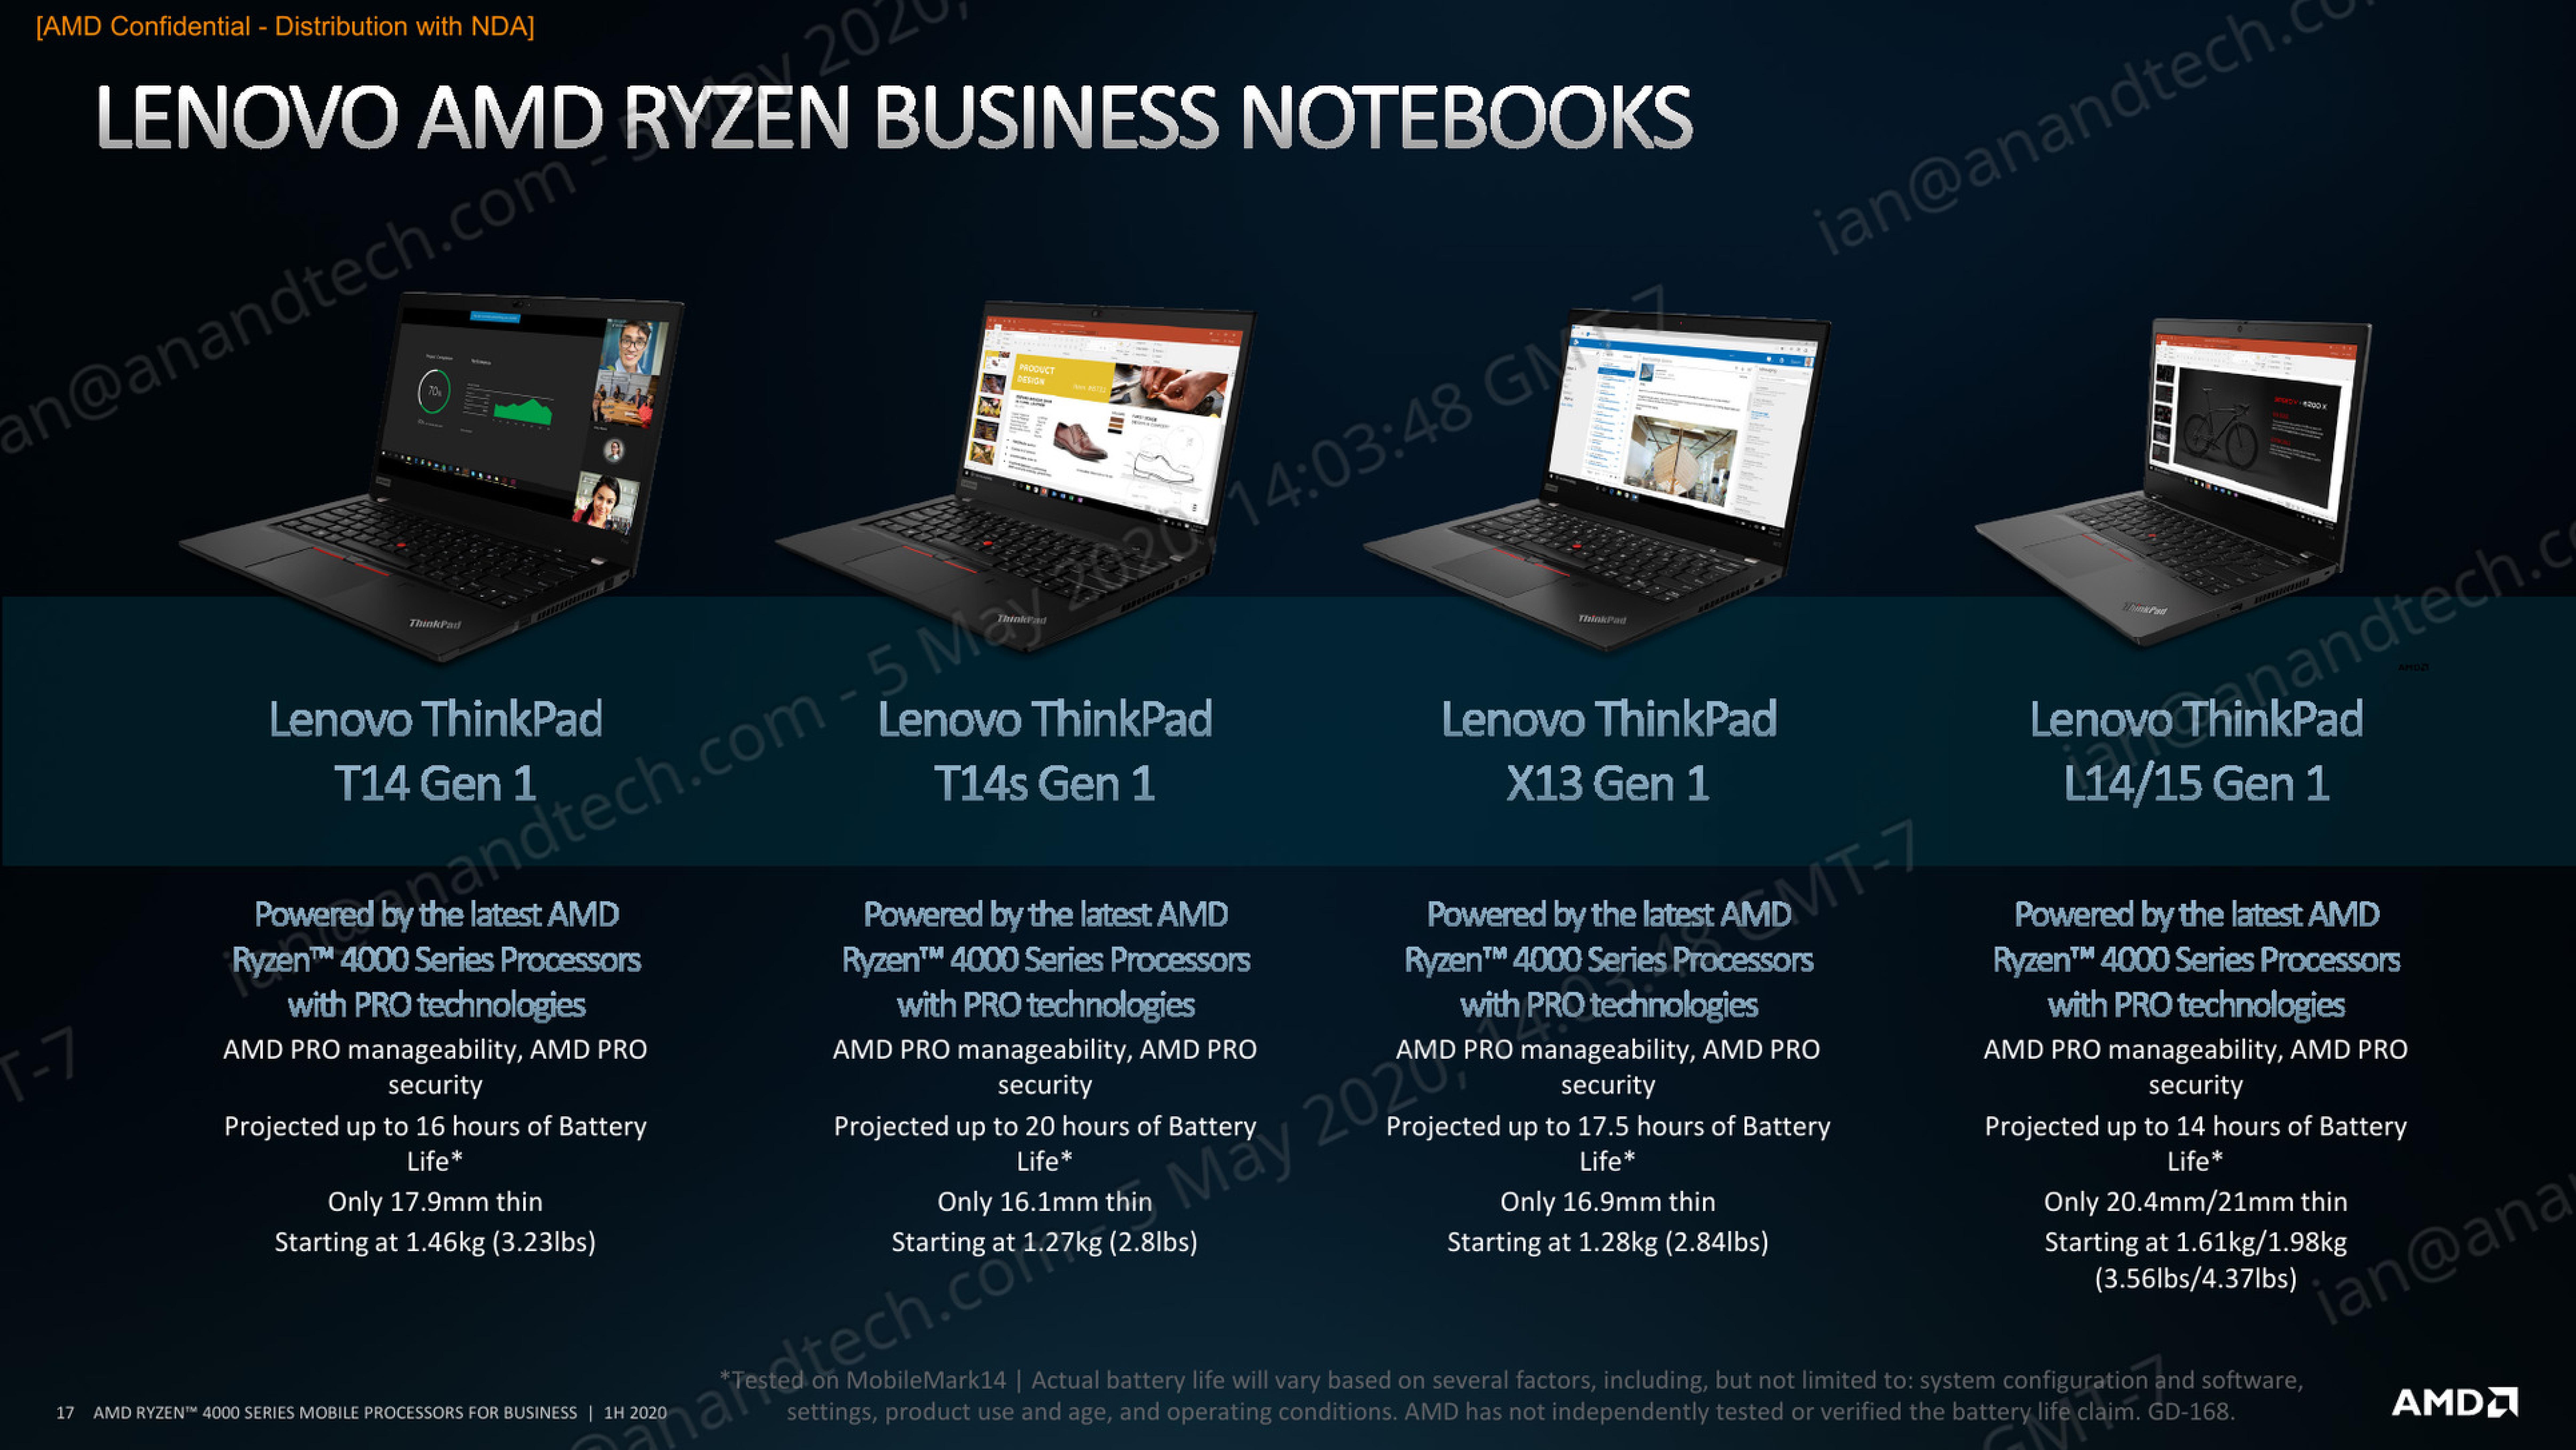 AMD Ryzen 5 4500 Desktop Processor - Techmart Unbox